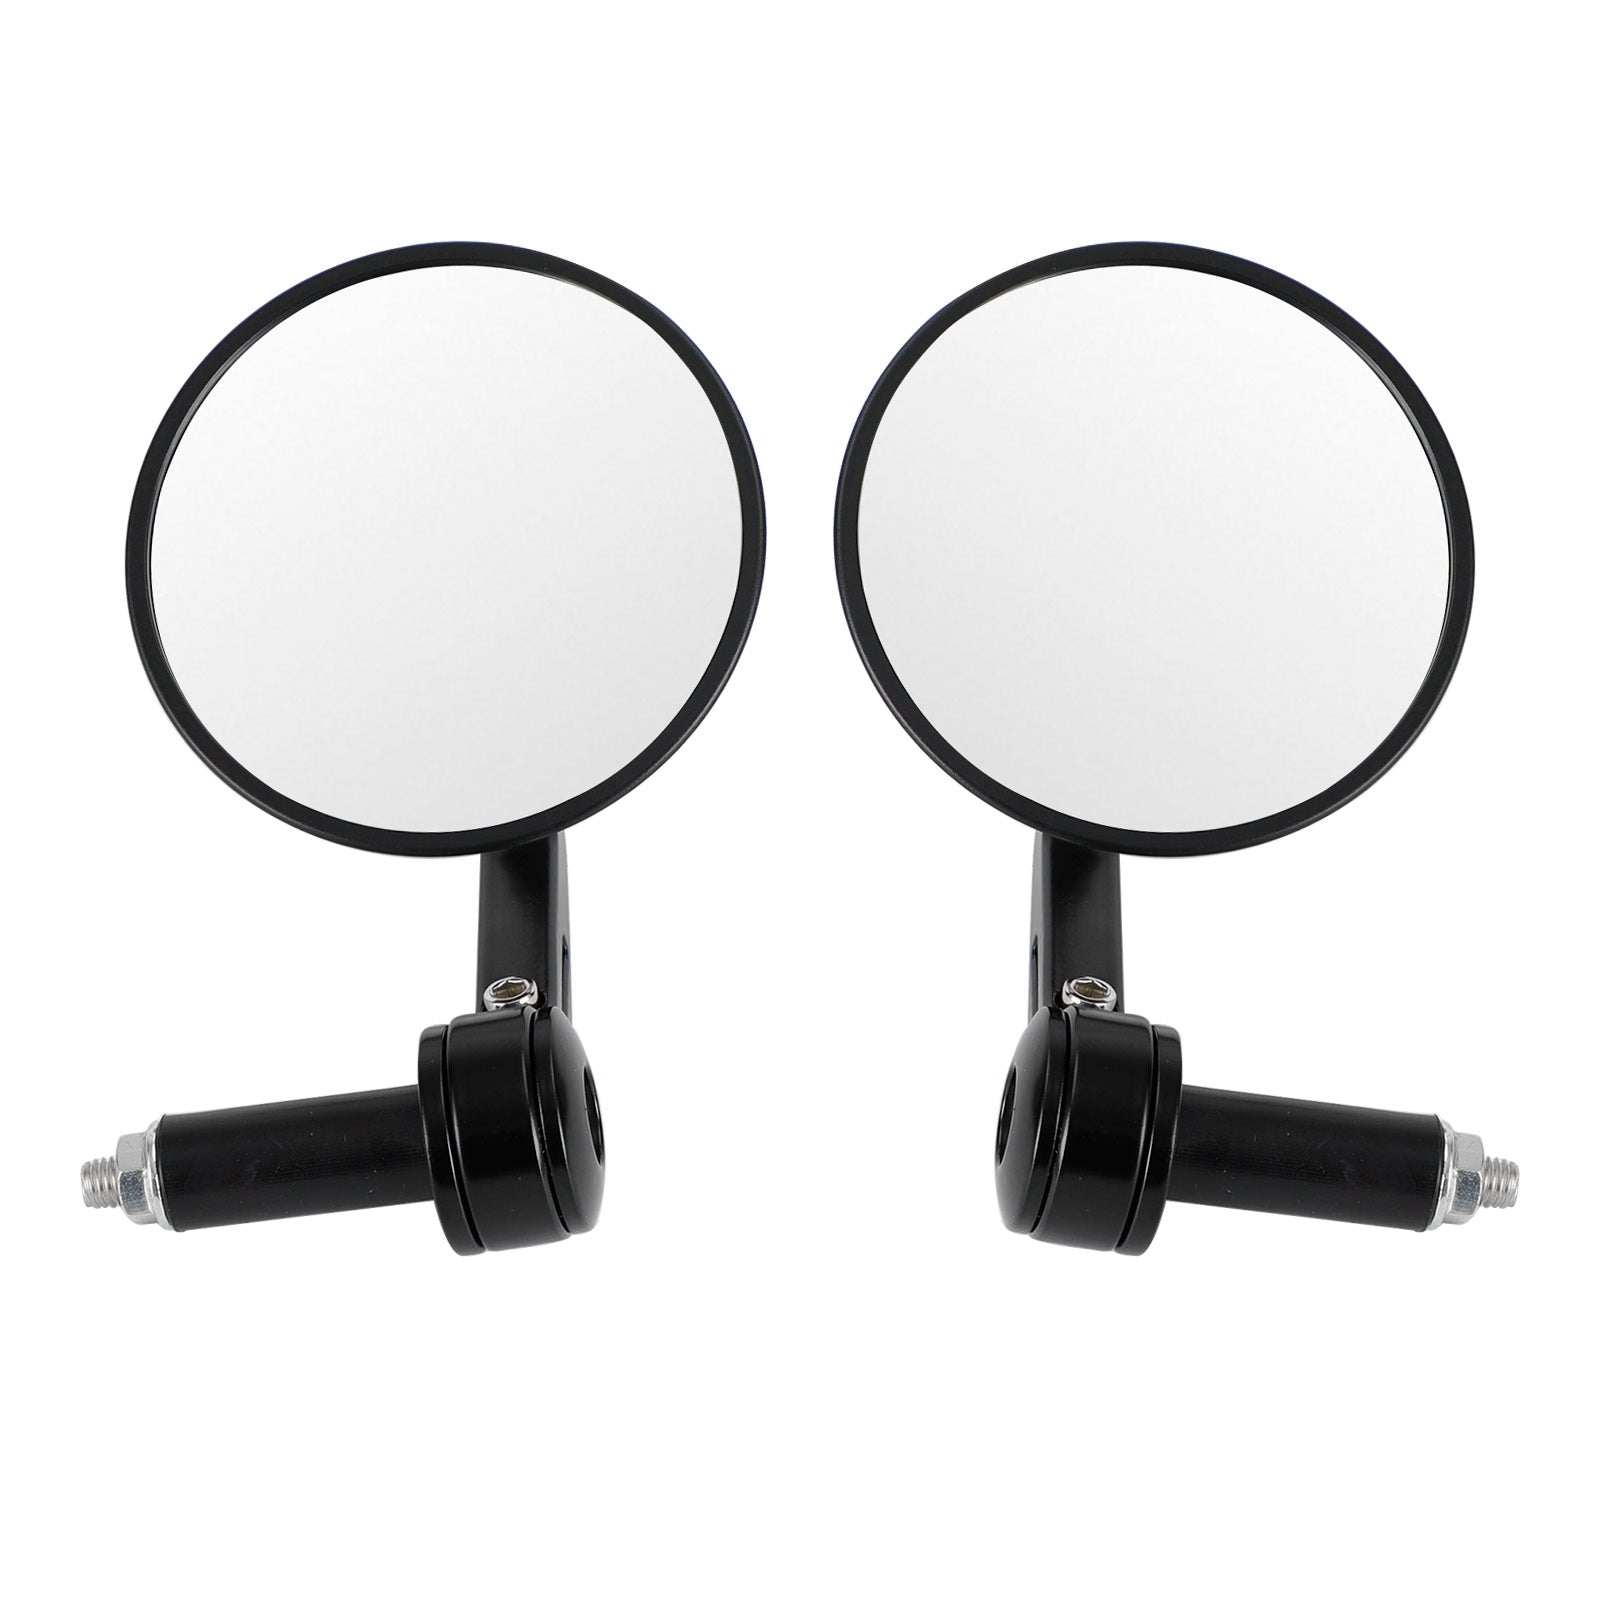 Custom Lenkerendenspiegel, blendfrei, rund, schwarz, Billet-Qualität, 22 mm, 7/8 Zoll, 2 Stück